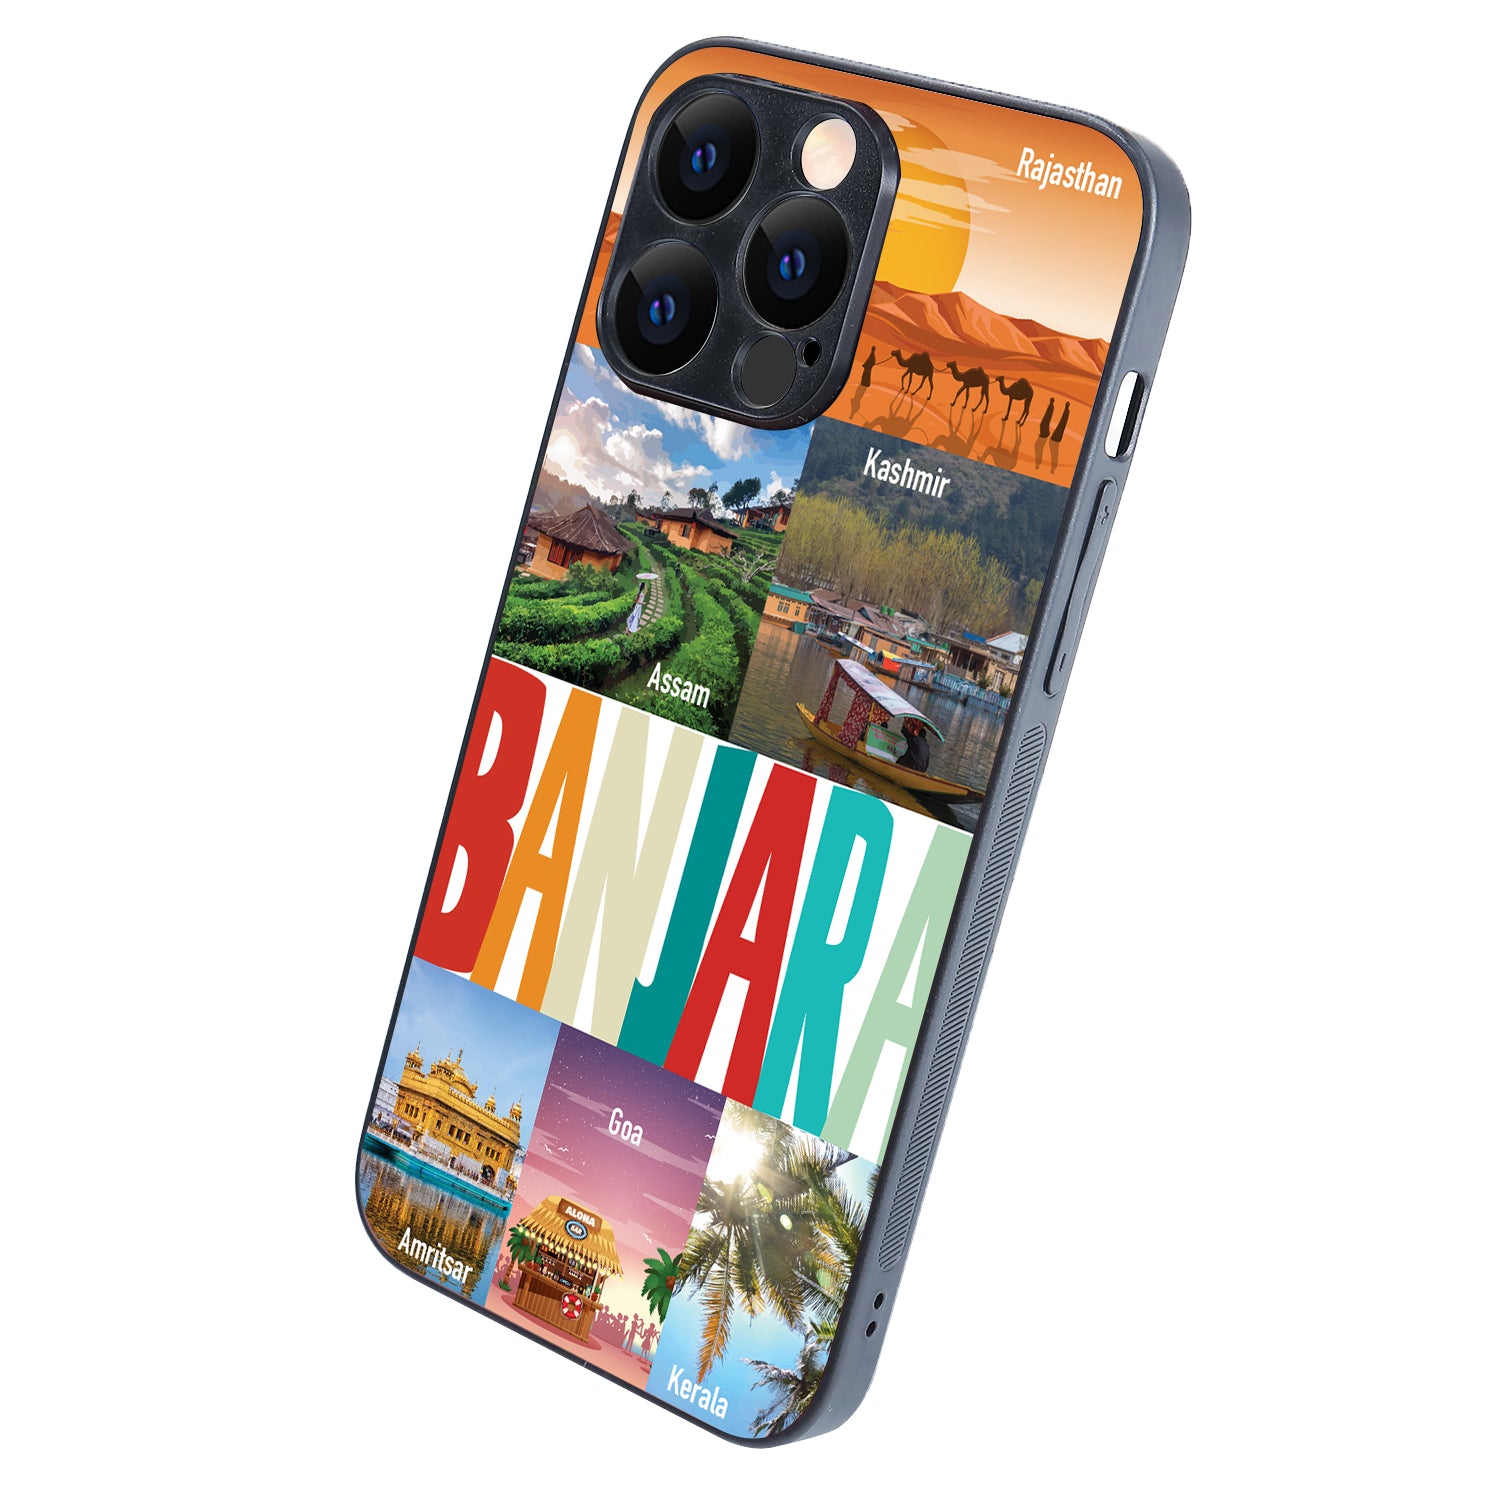 Banjara Travel iPhone 14 Pro Max Case